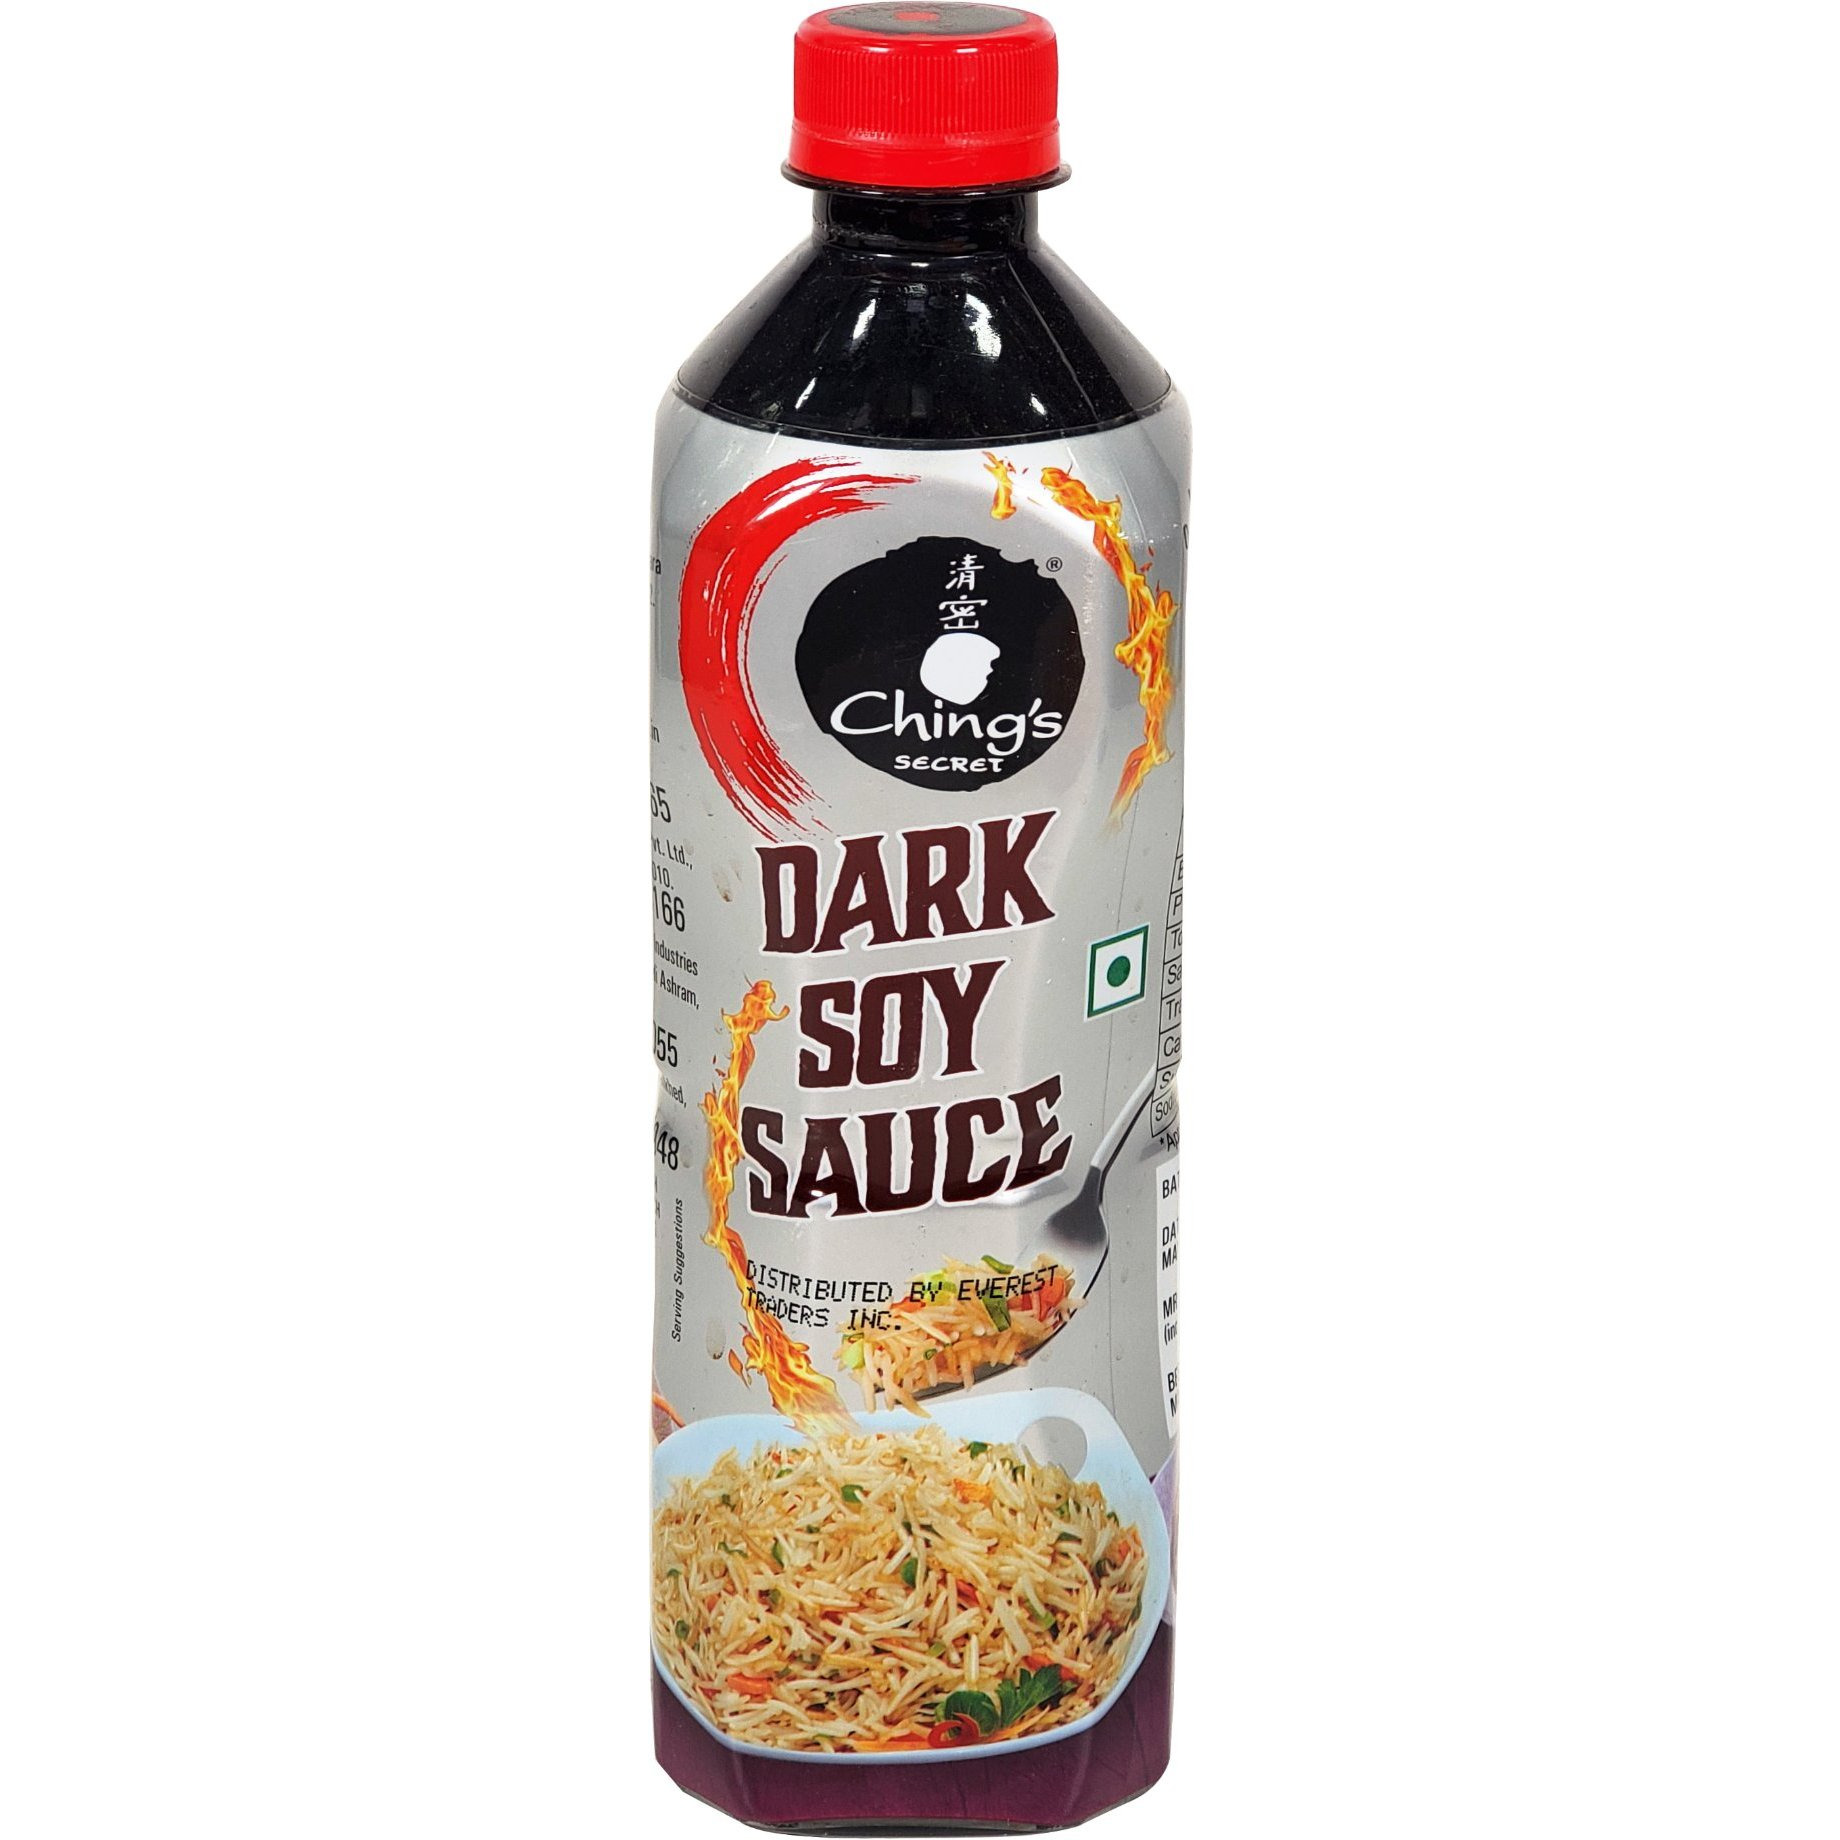 Ching's Secret Dark Soy Sauce - 750 Gm (26.45 Oz)